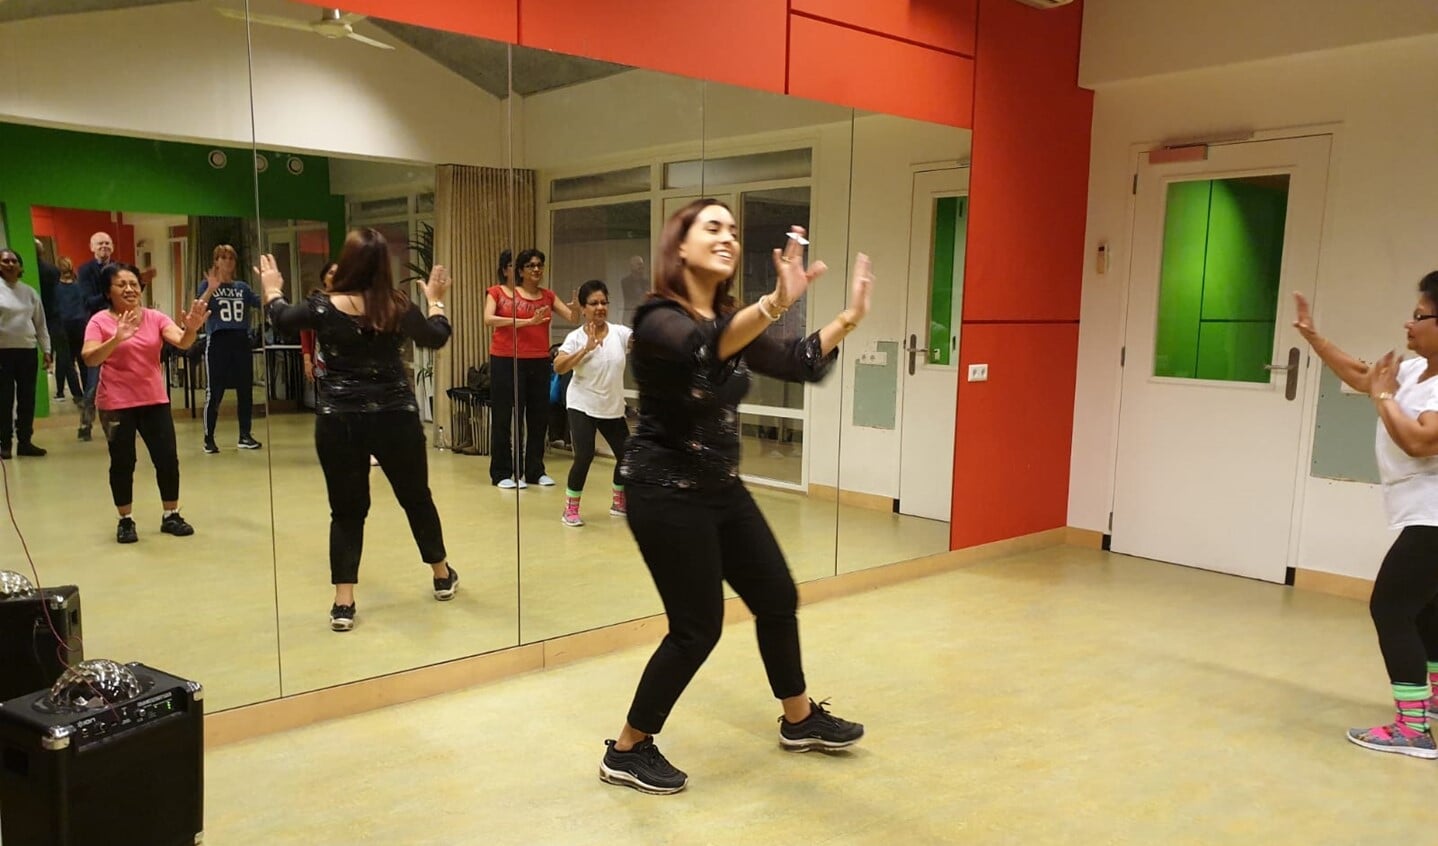 Dachel geeft Bollywood-dansles: leuk en gezond.